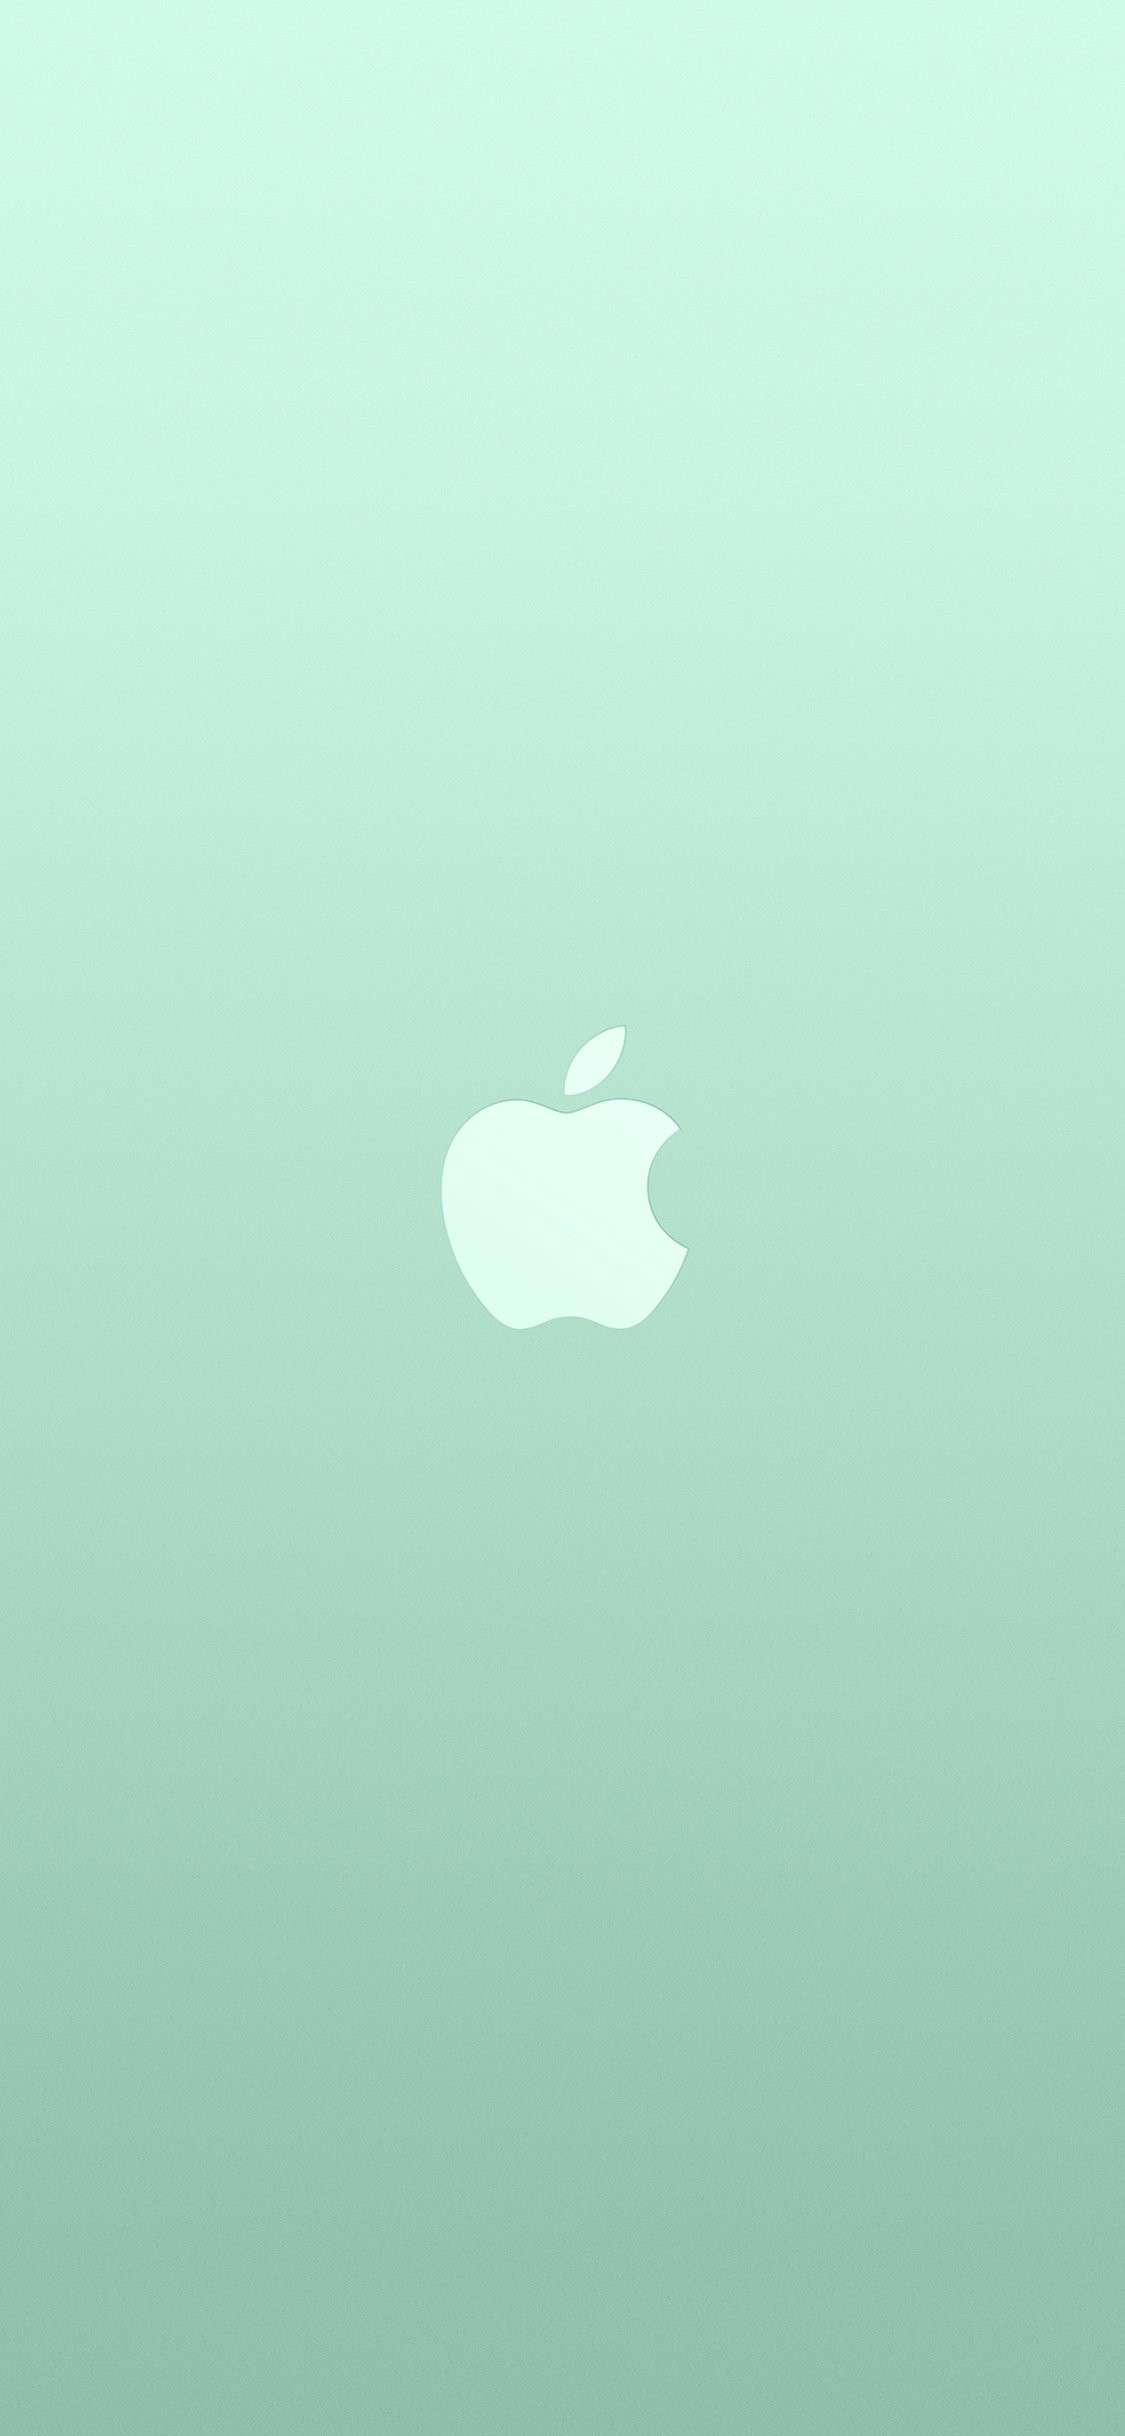 1125x2436 iPhoneXpapers.com | iPhone X wallpaper | au17-logo-apple-green-white -minimal-illustration-art